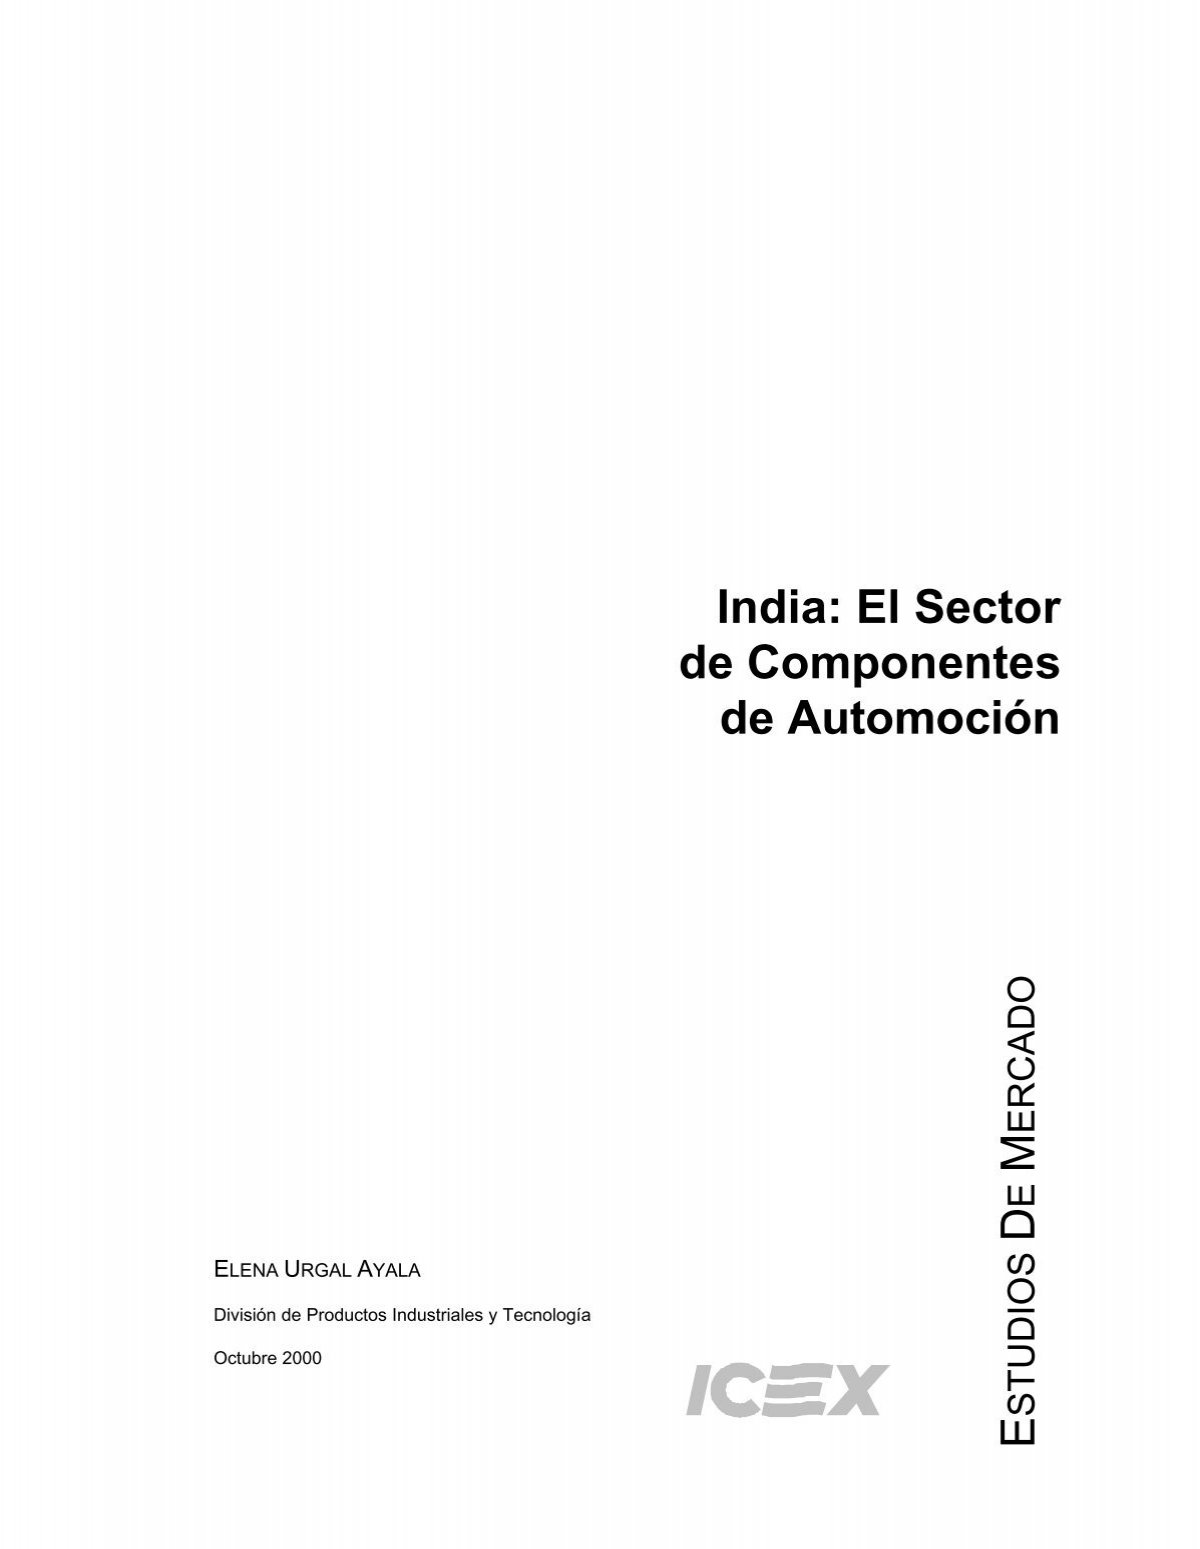 El Sector de los componentes en India - OMEGA